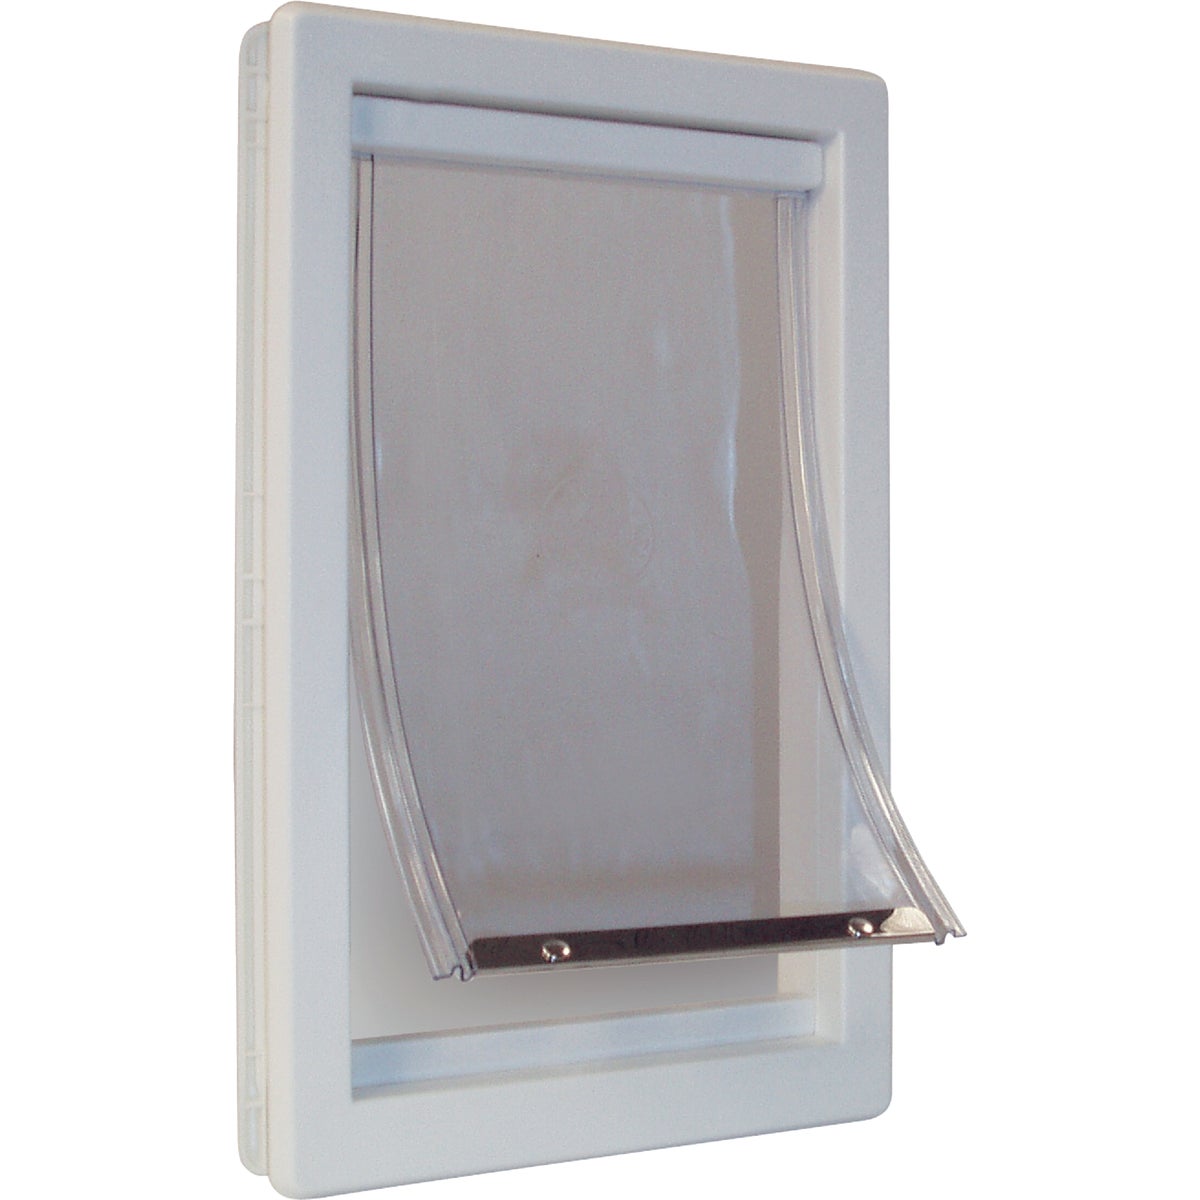 Item 761406, ThermoPlastic pet door features inner telescoping frame that adapts to 